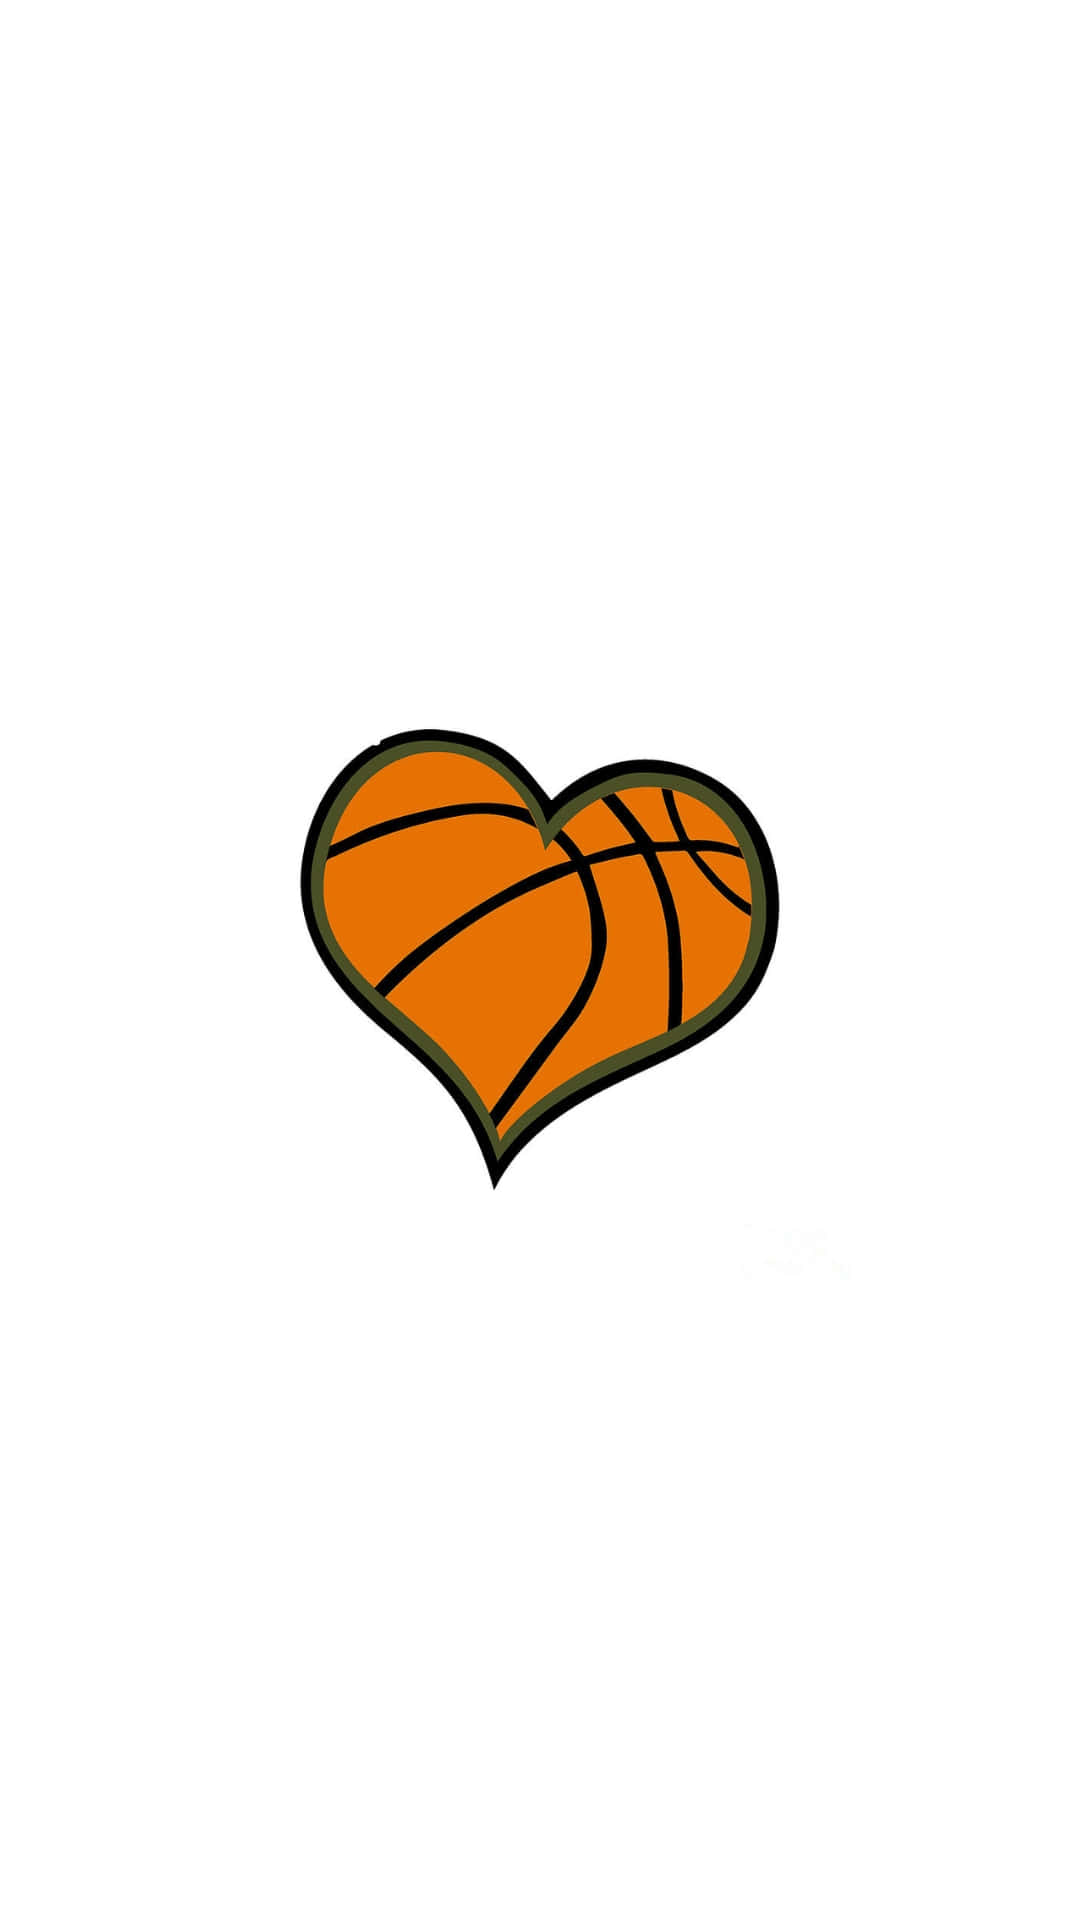 Basketball Heart Love Symbol Wallpaper